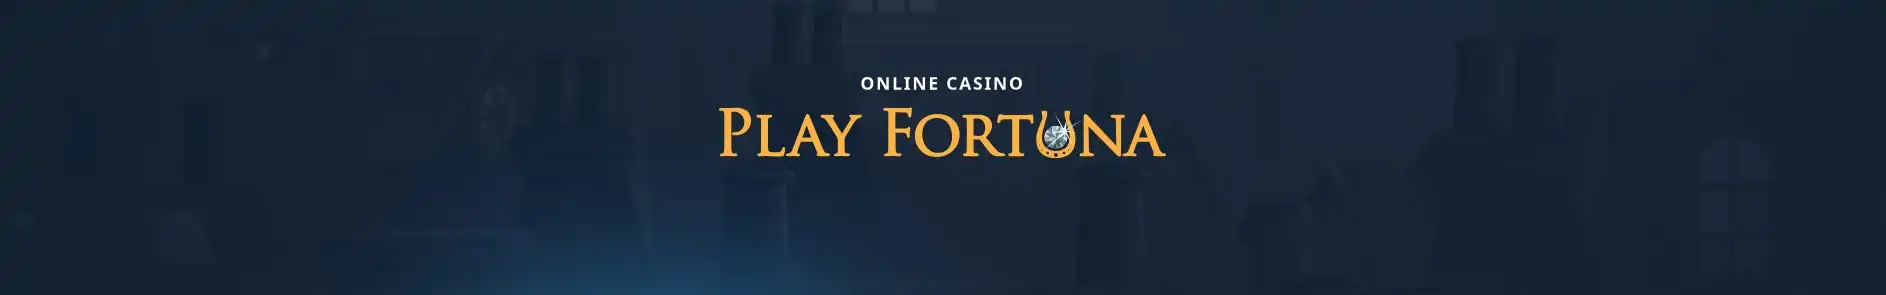 Playfortuna Casino Recenzia